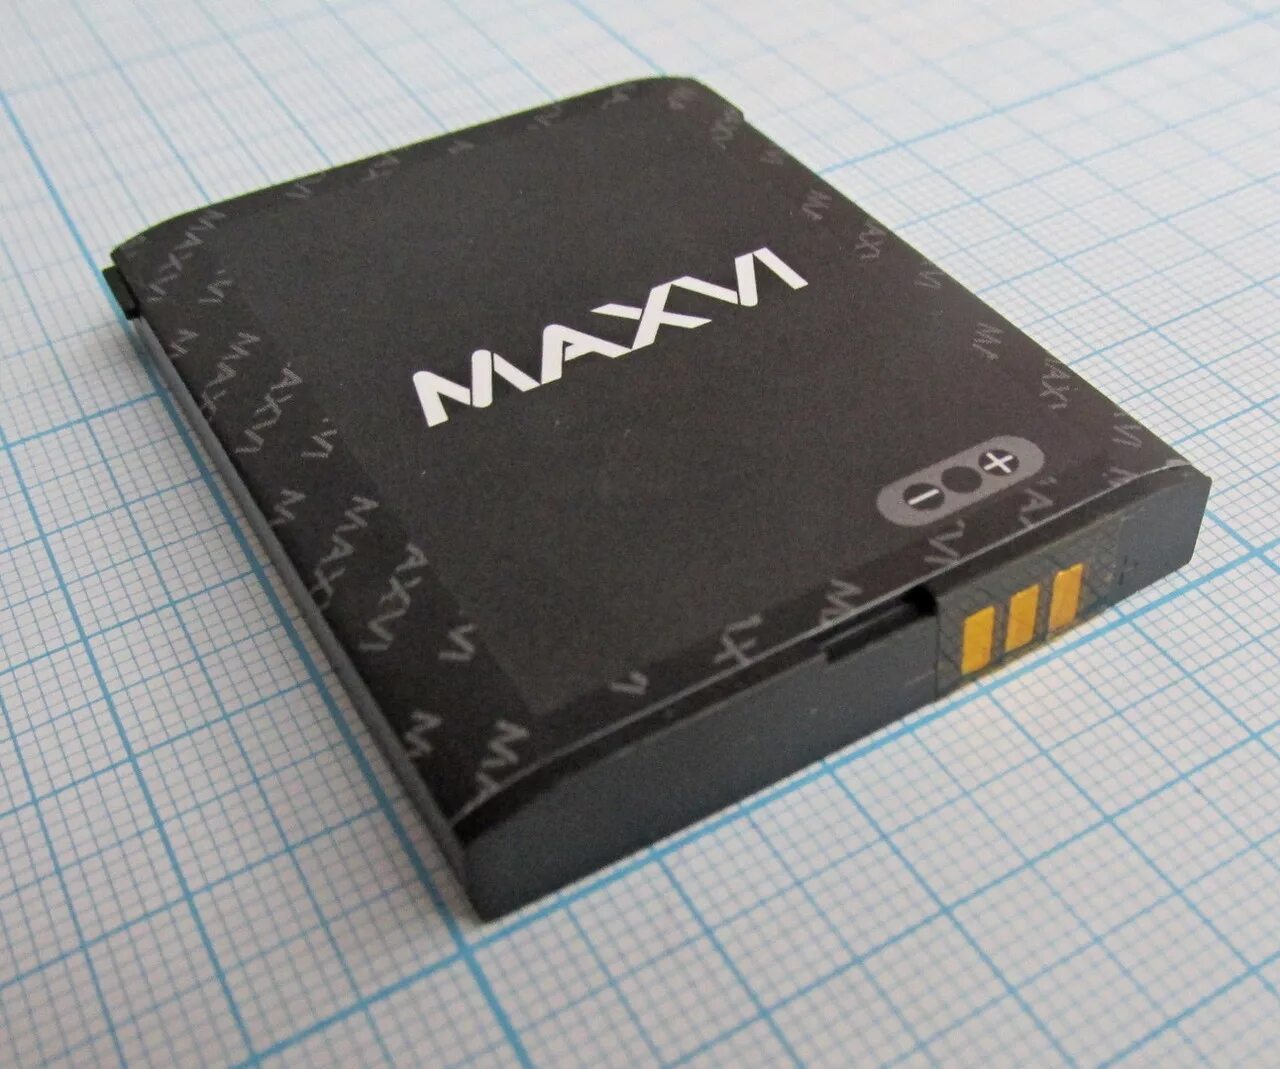 Автомобильный аккумулятор телефона. Батарея MB 1602 Maxvi. Maxvi b5 аккумулятор. Maxvi MB-1602 аккумулятор. Аккумулятор для телефона Maxvi b5.